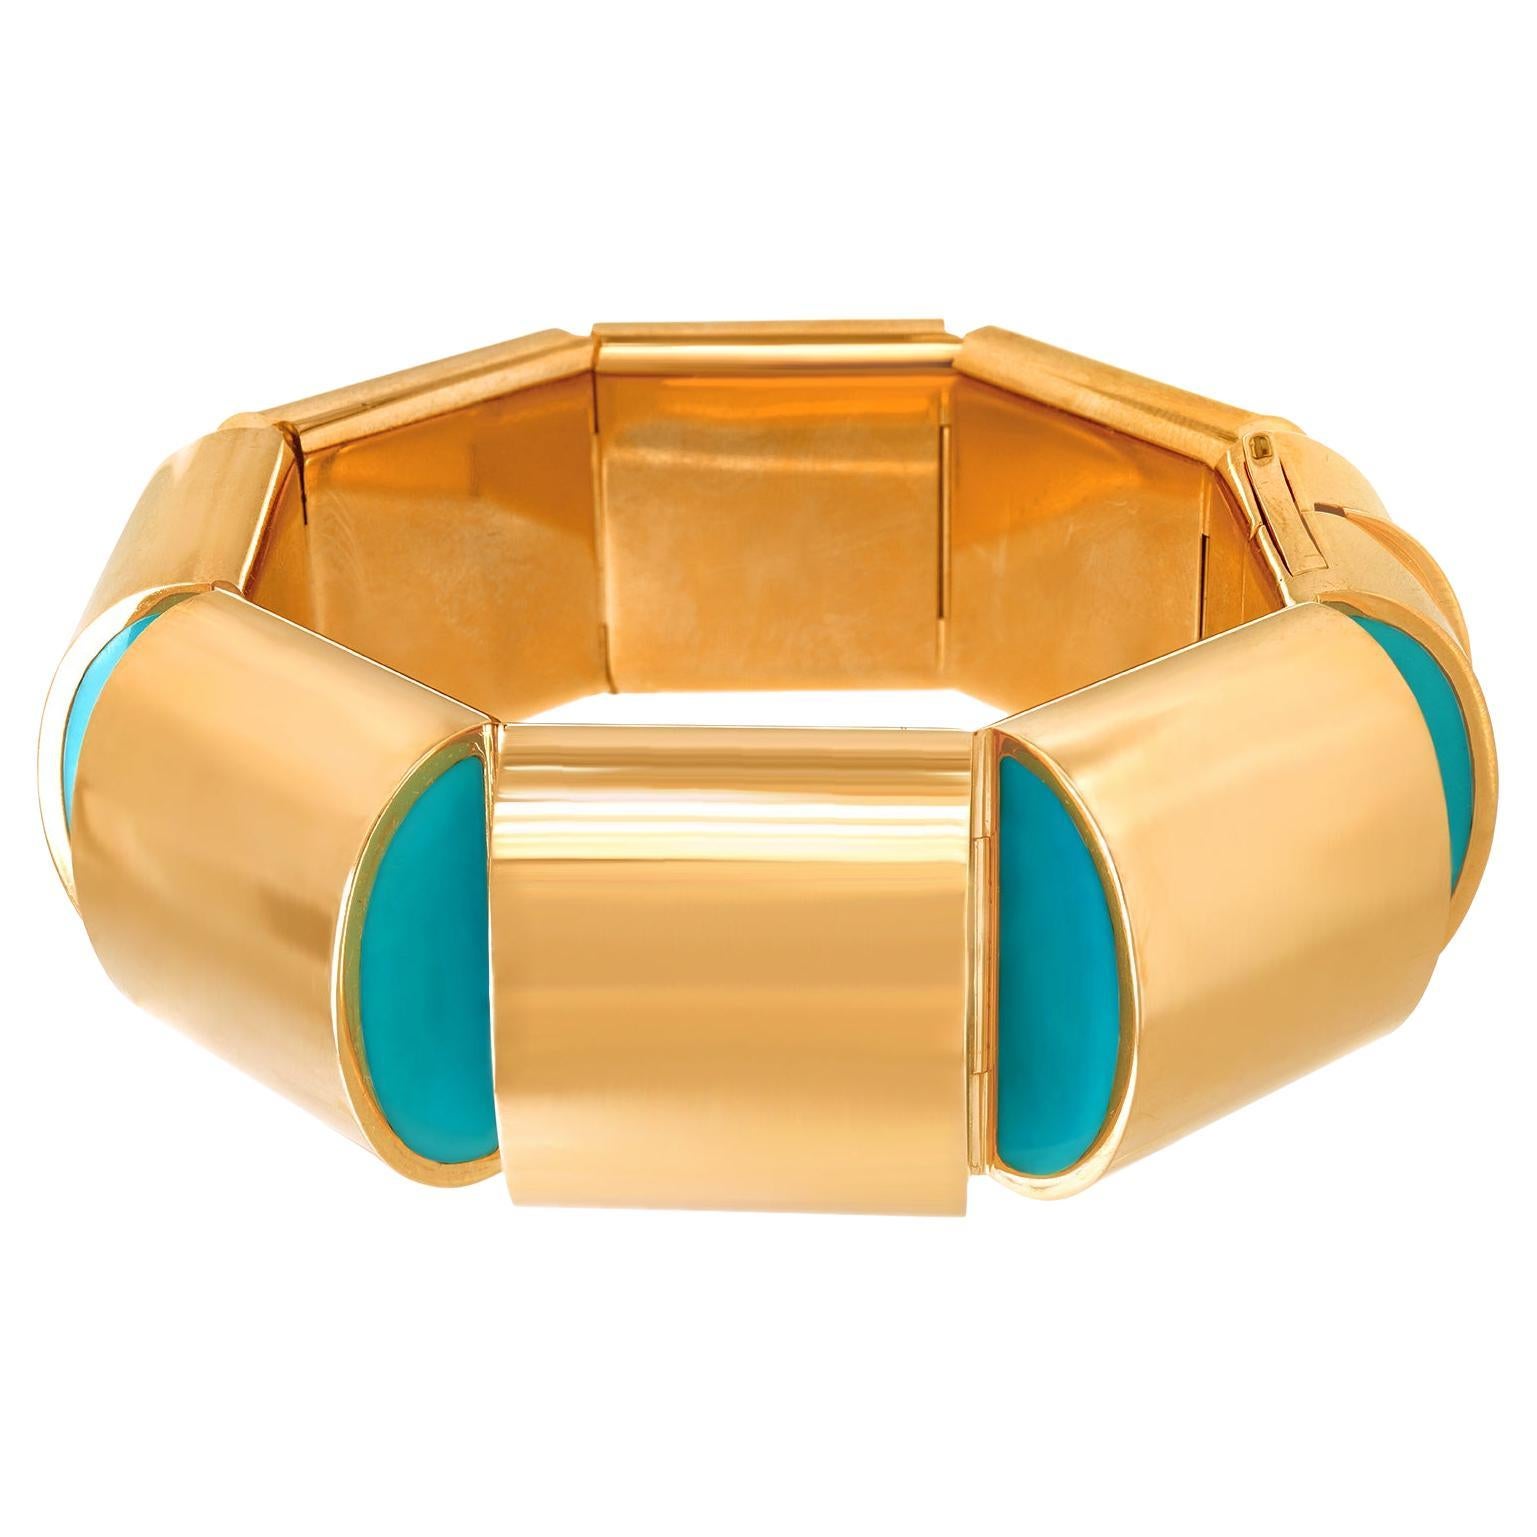 Vhernier "Sorpresa" Turquoise and Gold Bracelet